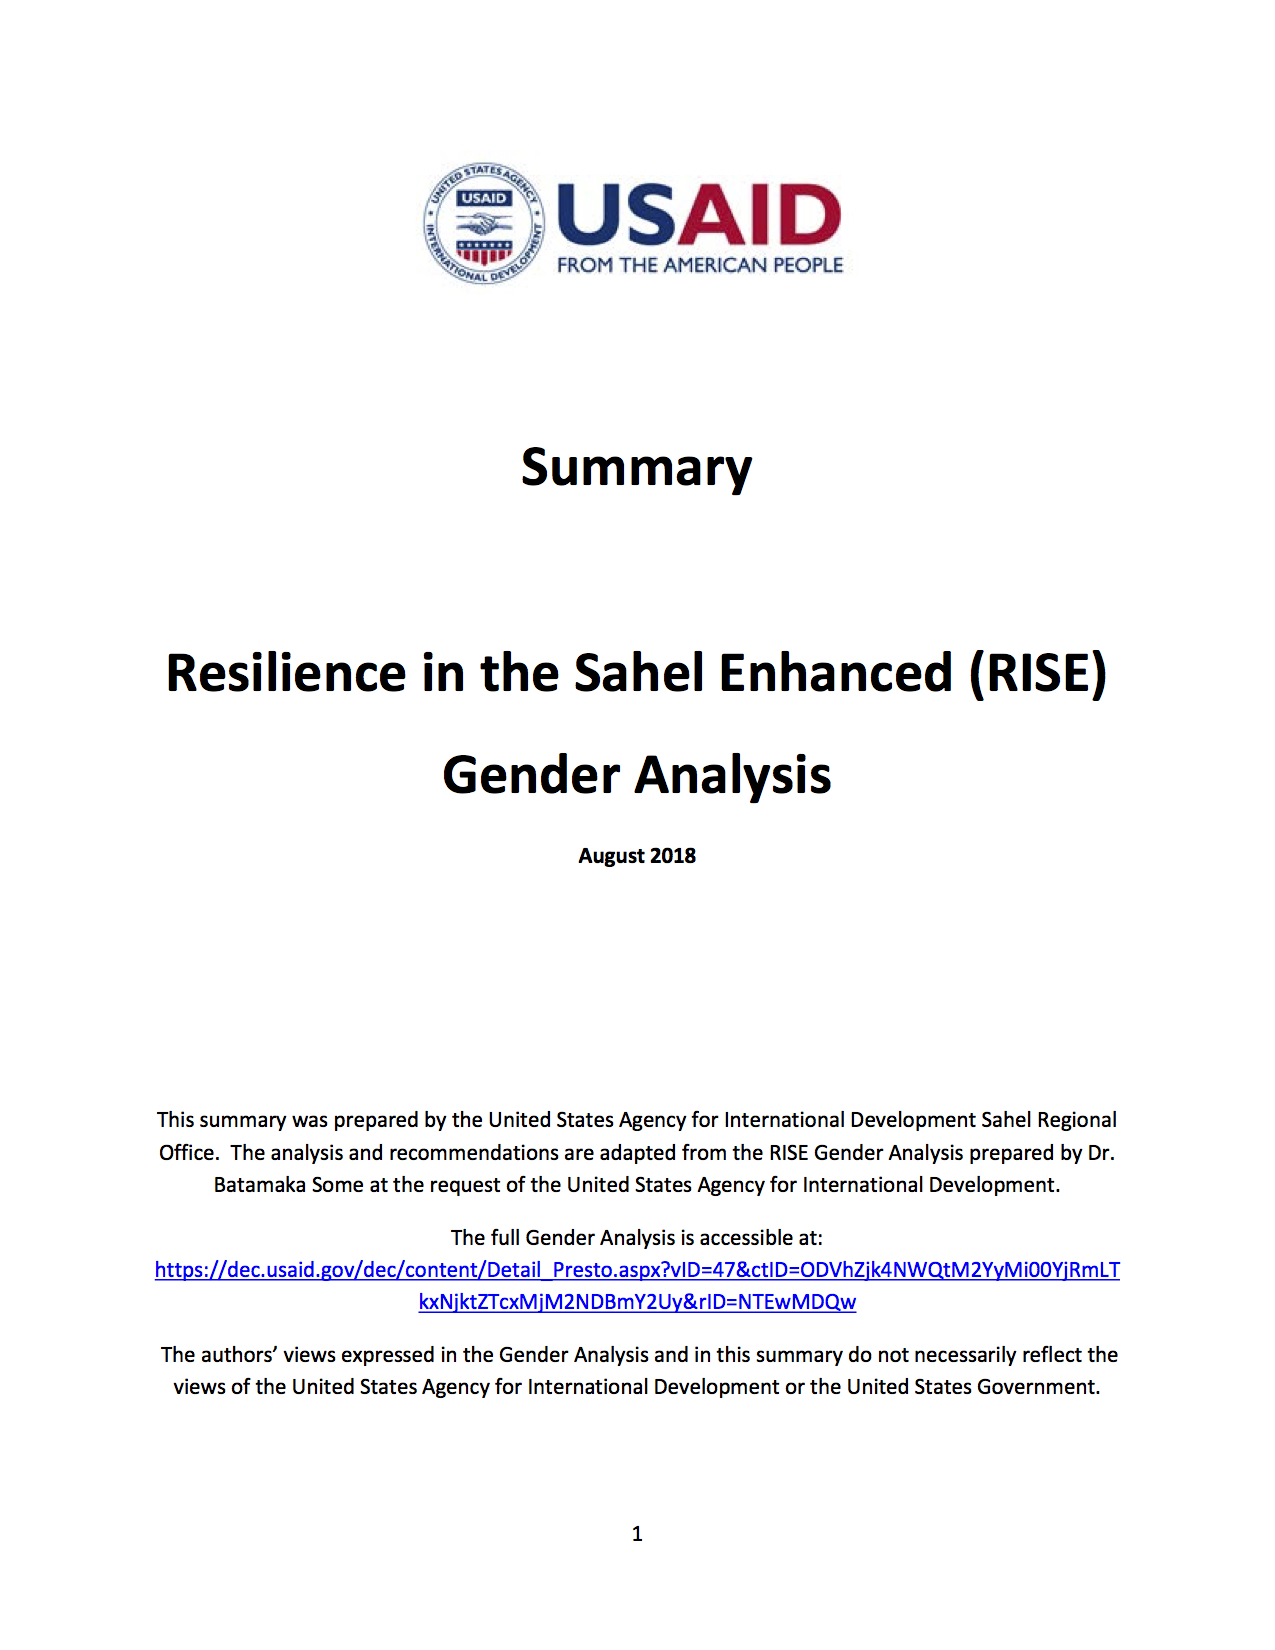 Summary of RISE Gender Analysis 2018